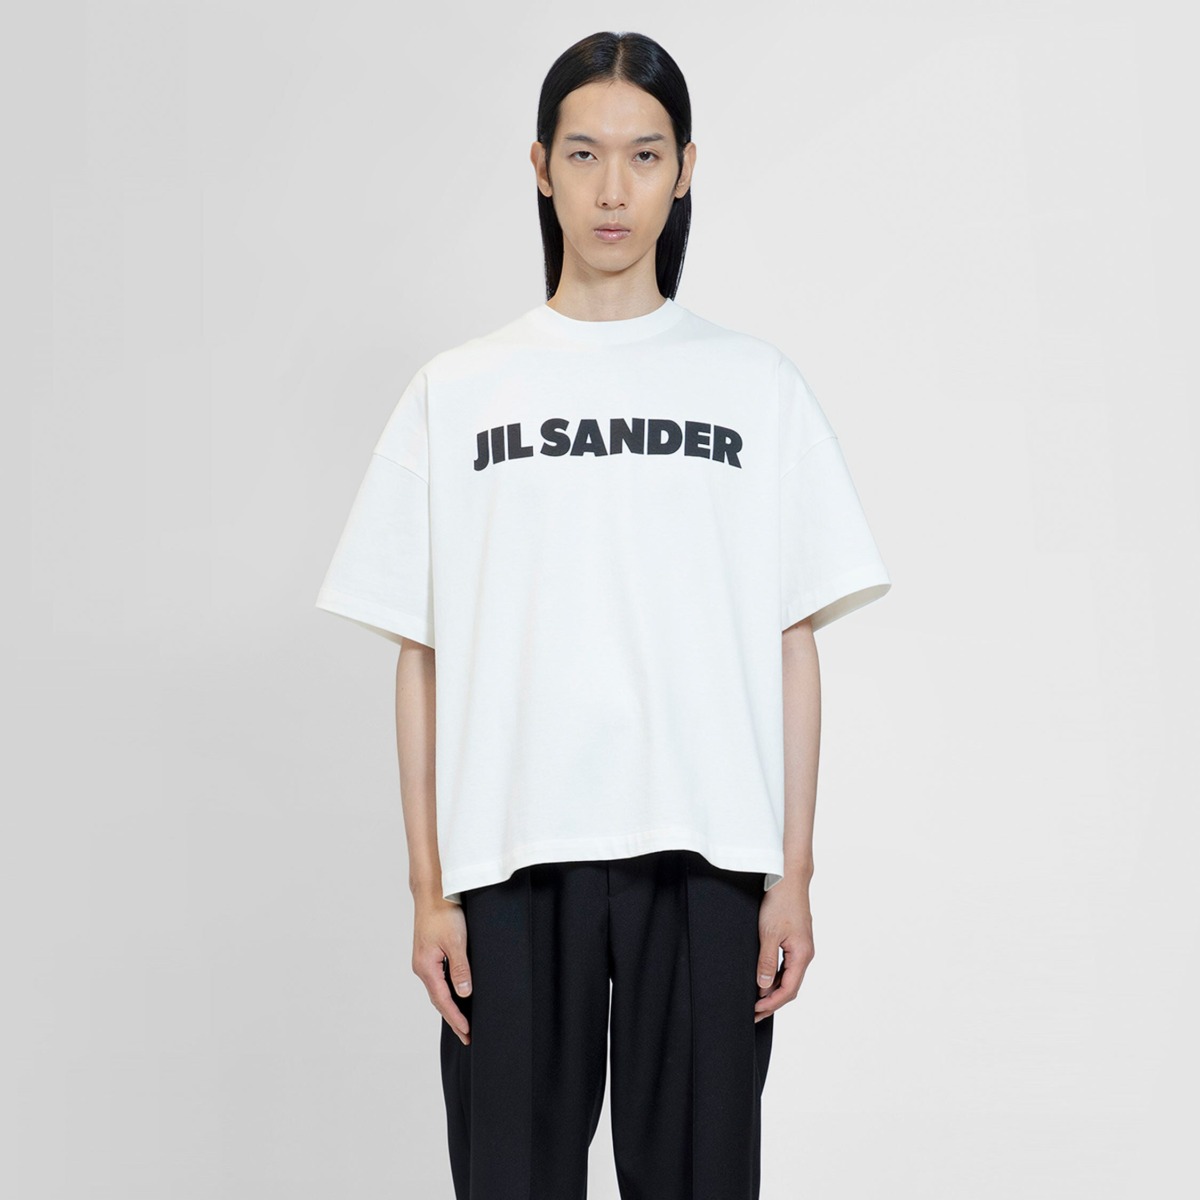 Jil Sander Men T-Shirt in White from Antonioli GOOFASH